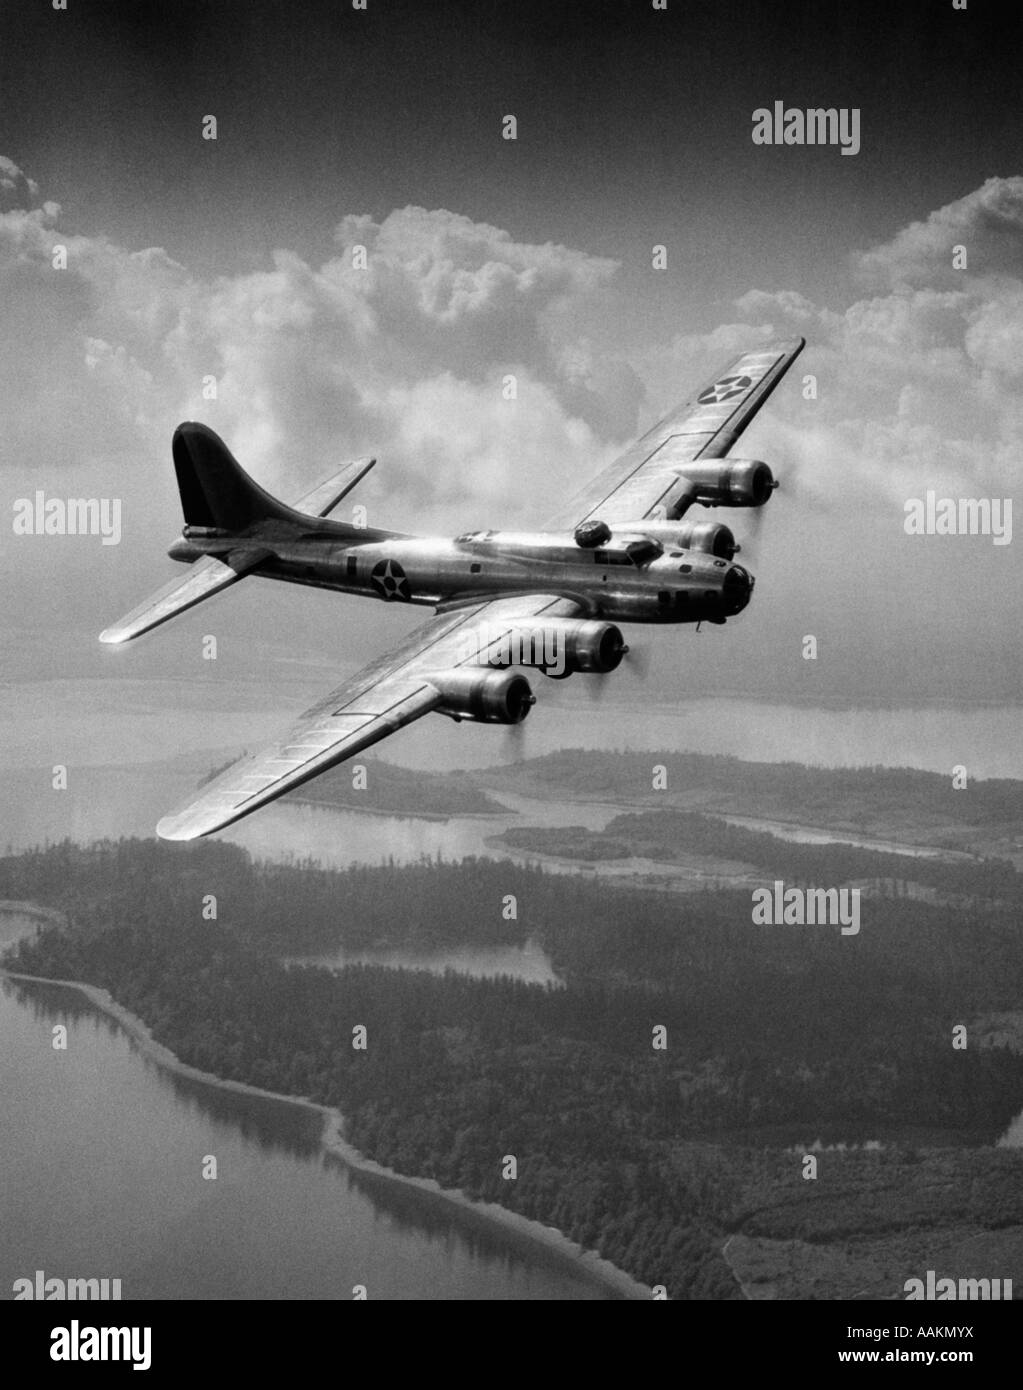 1940s US ARMY AIRCRAFT WORLD WAR II B-17 BOMBER IN FLIGHT Stock Photo